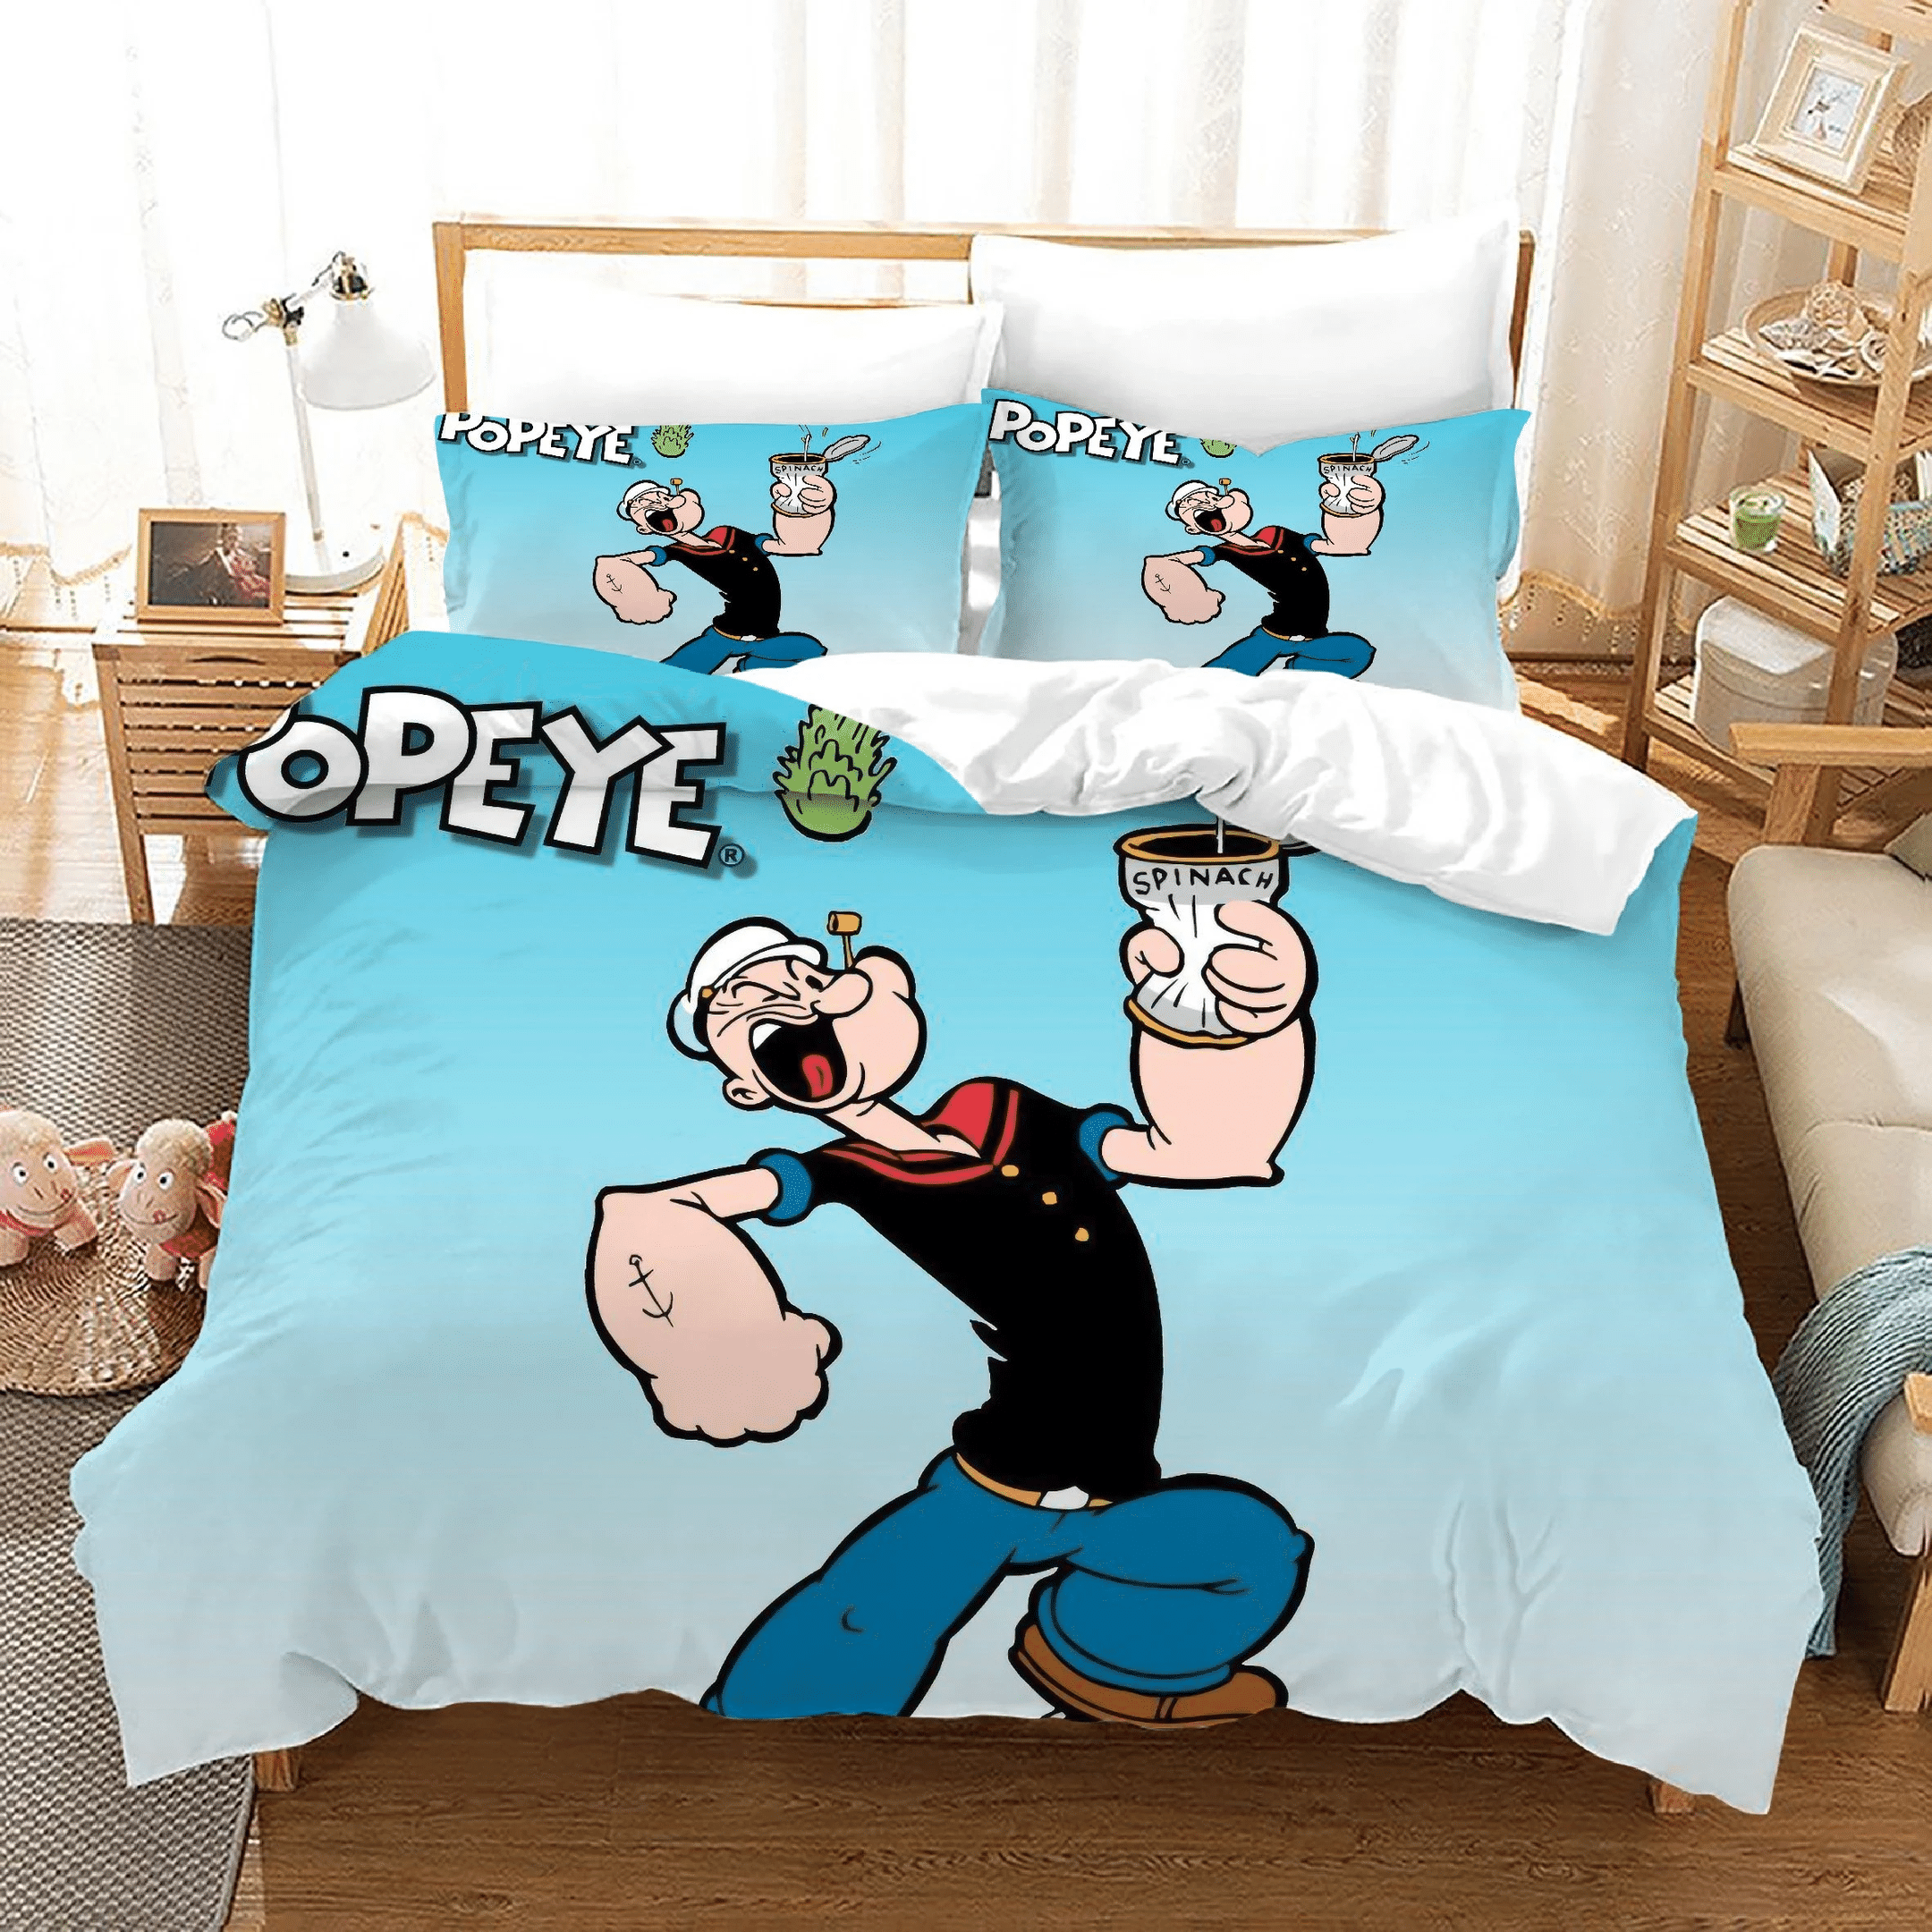 Popeye The Sailor 6 Duvet Cover Quilt Cover Pillowcase Bedding